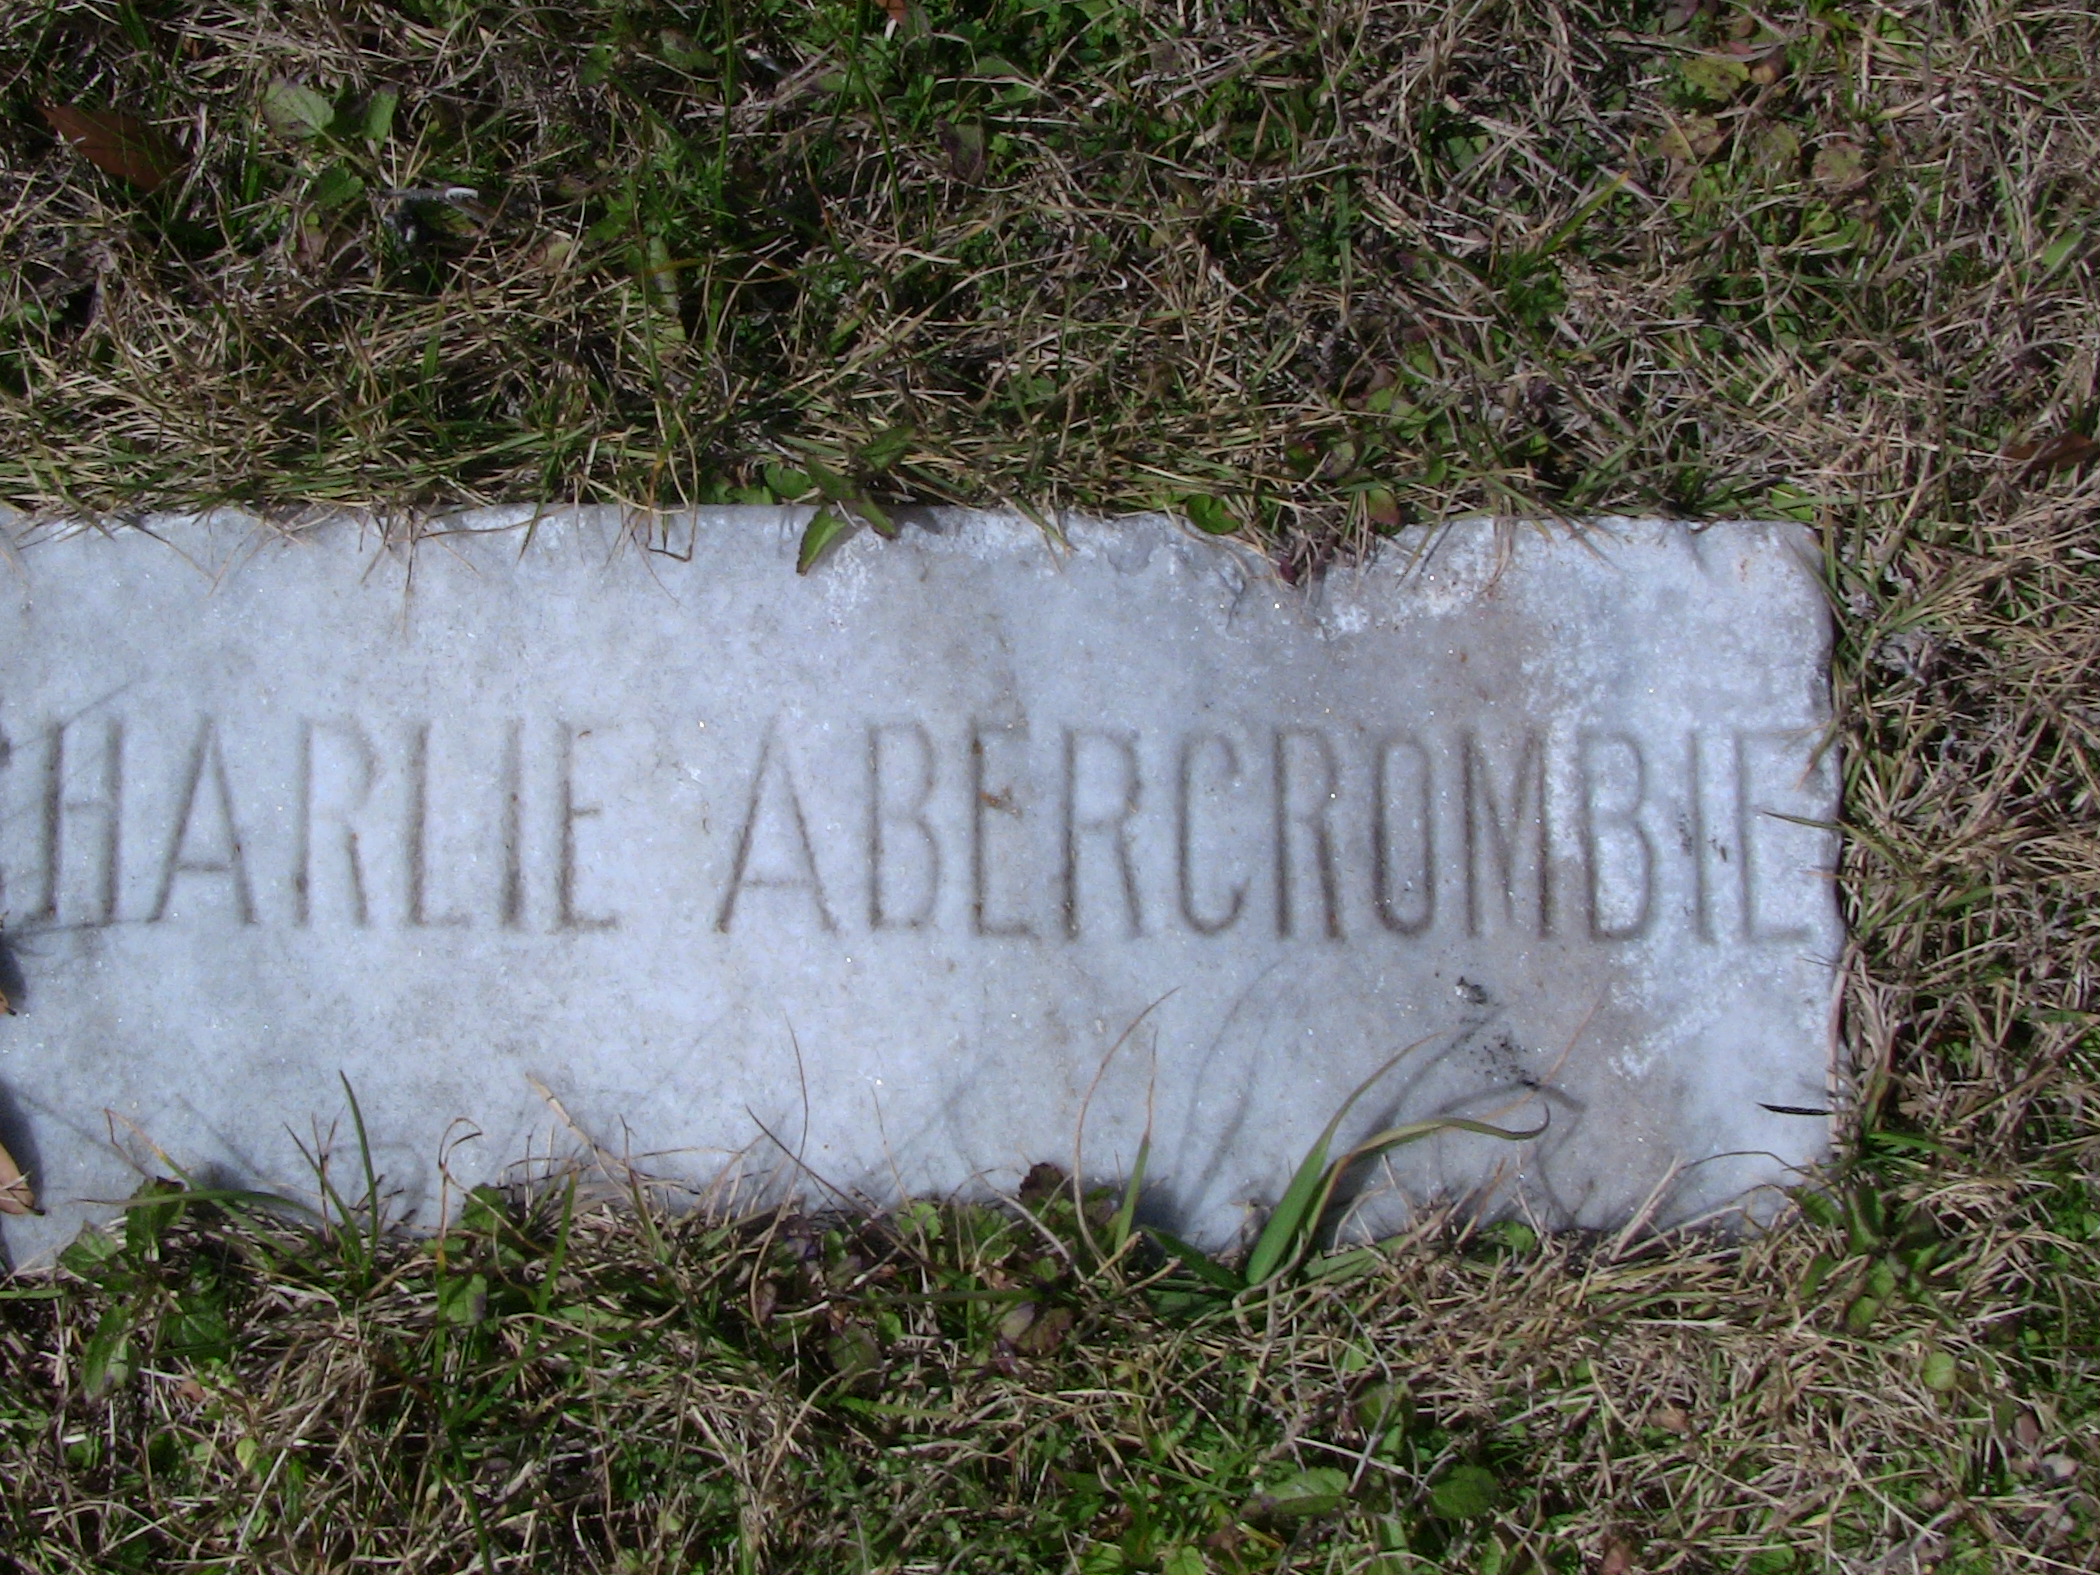 Charlie Abercrombie